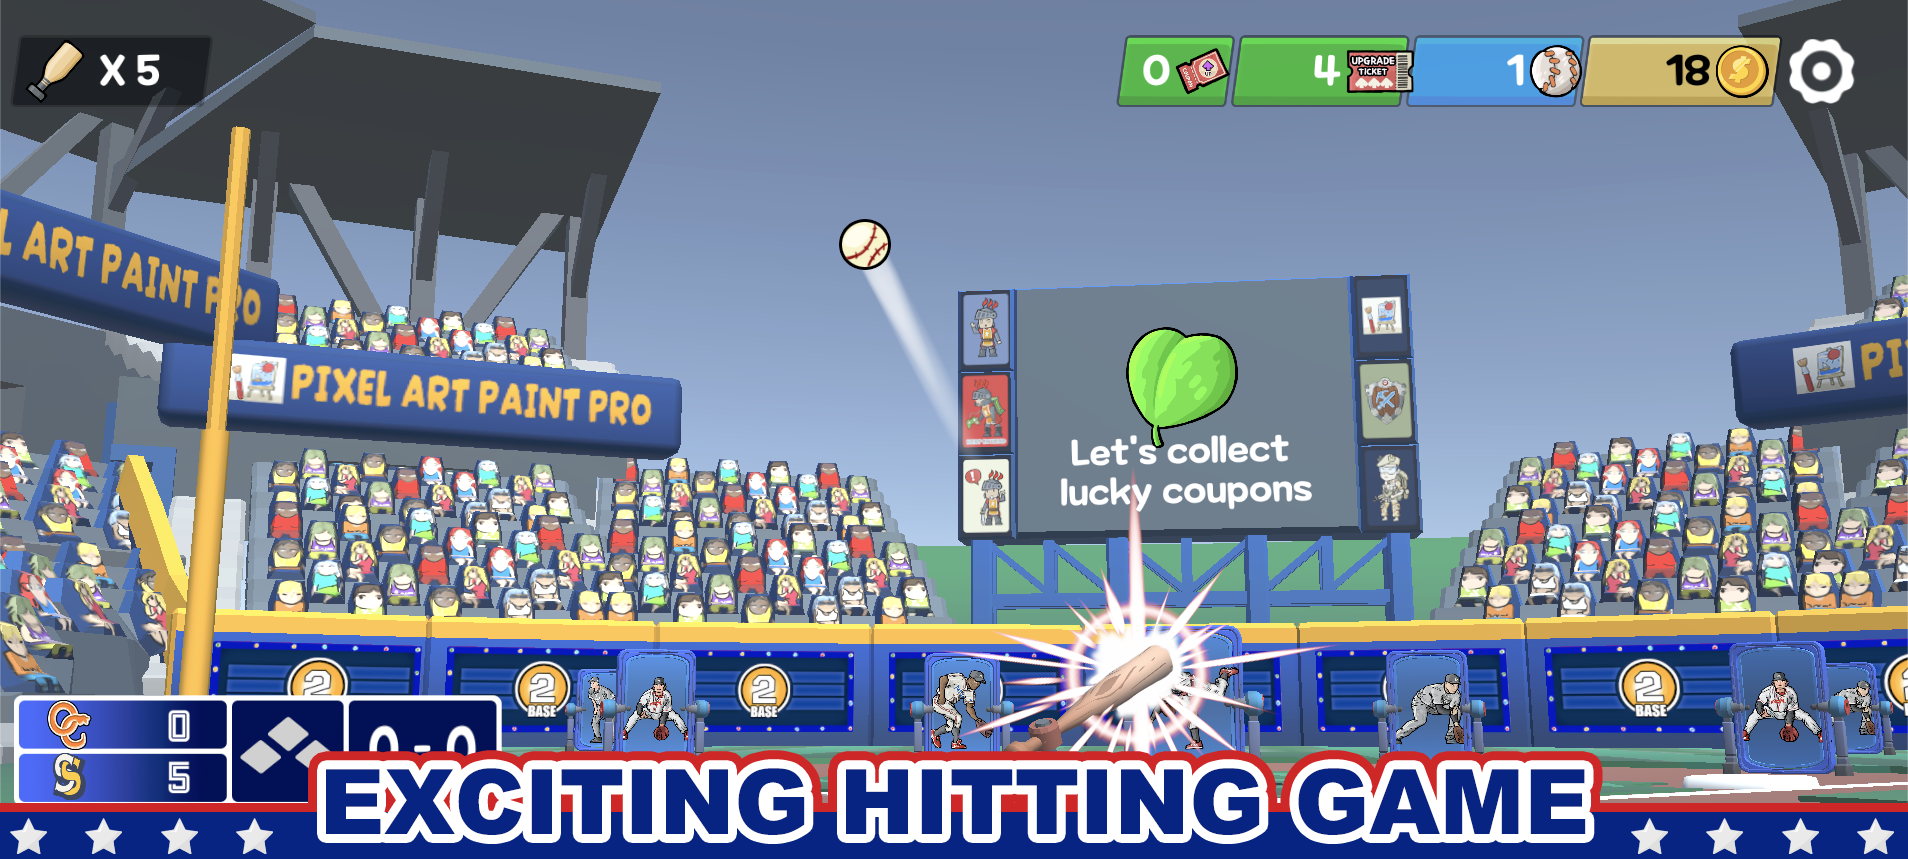 Pin baseball games - slugger screenshot game